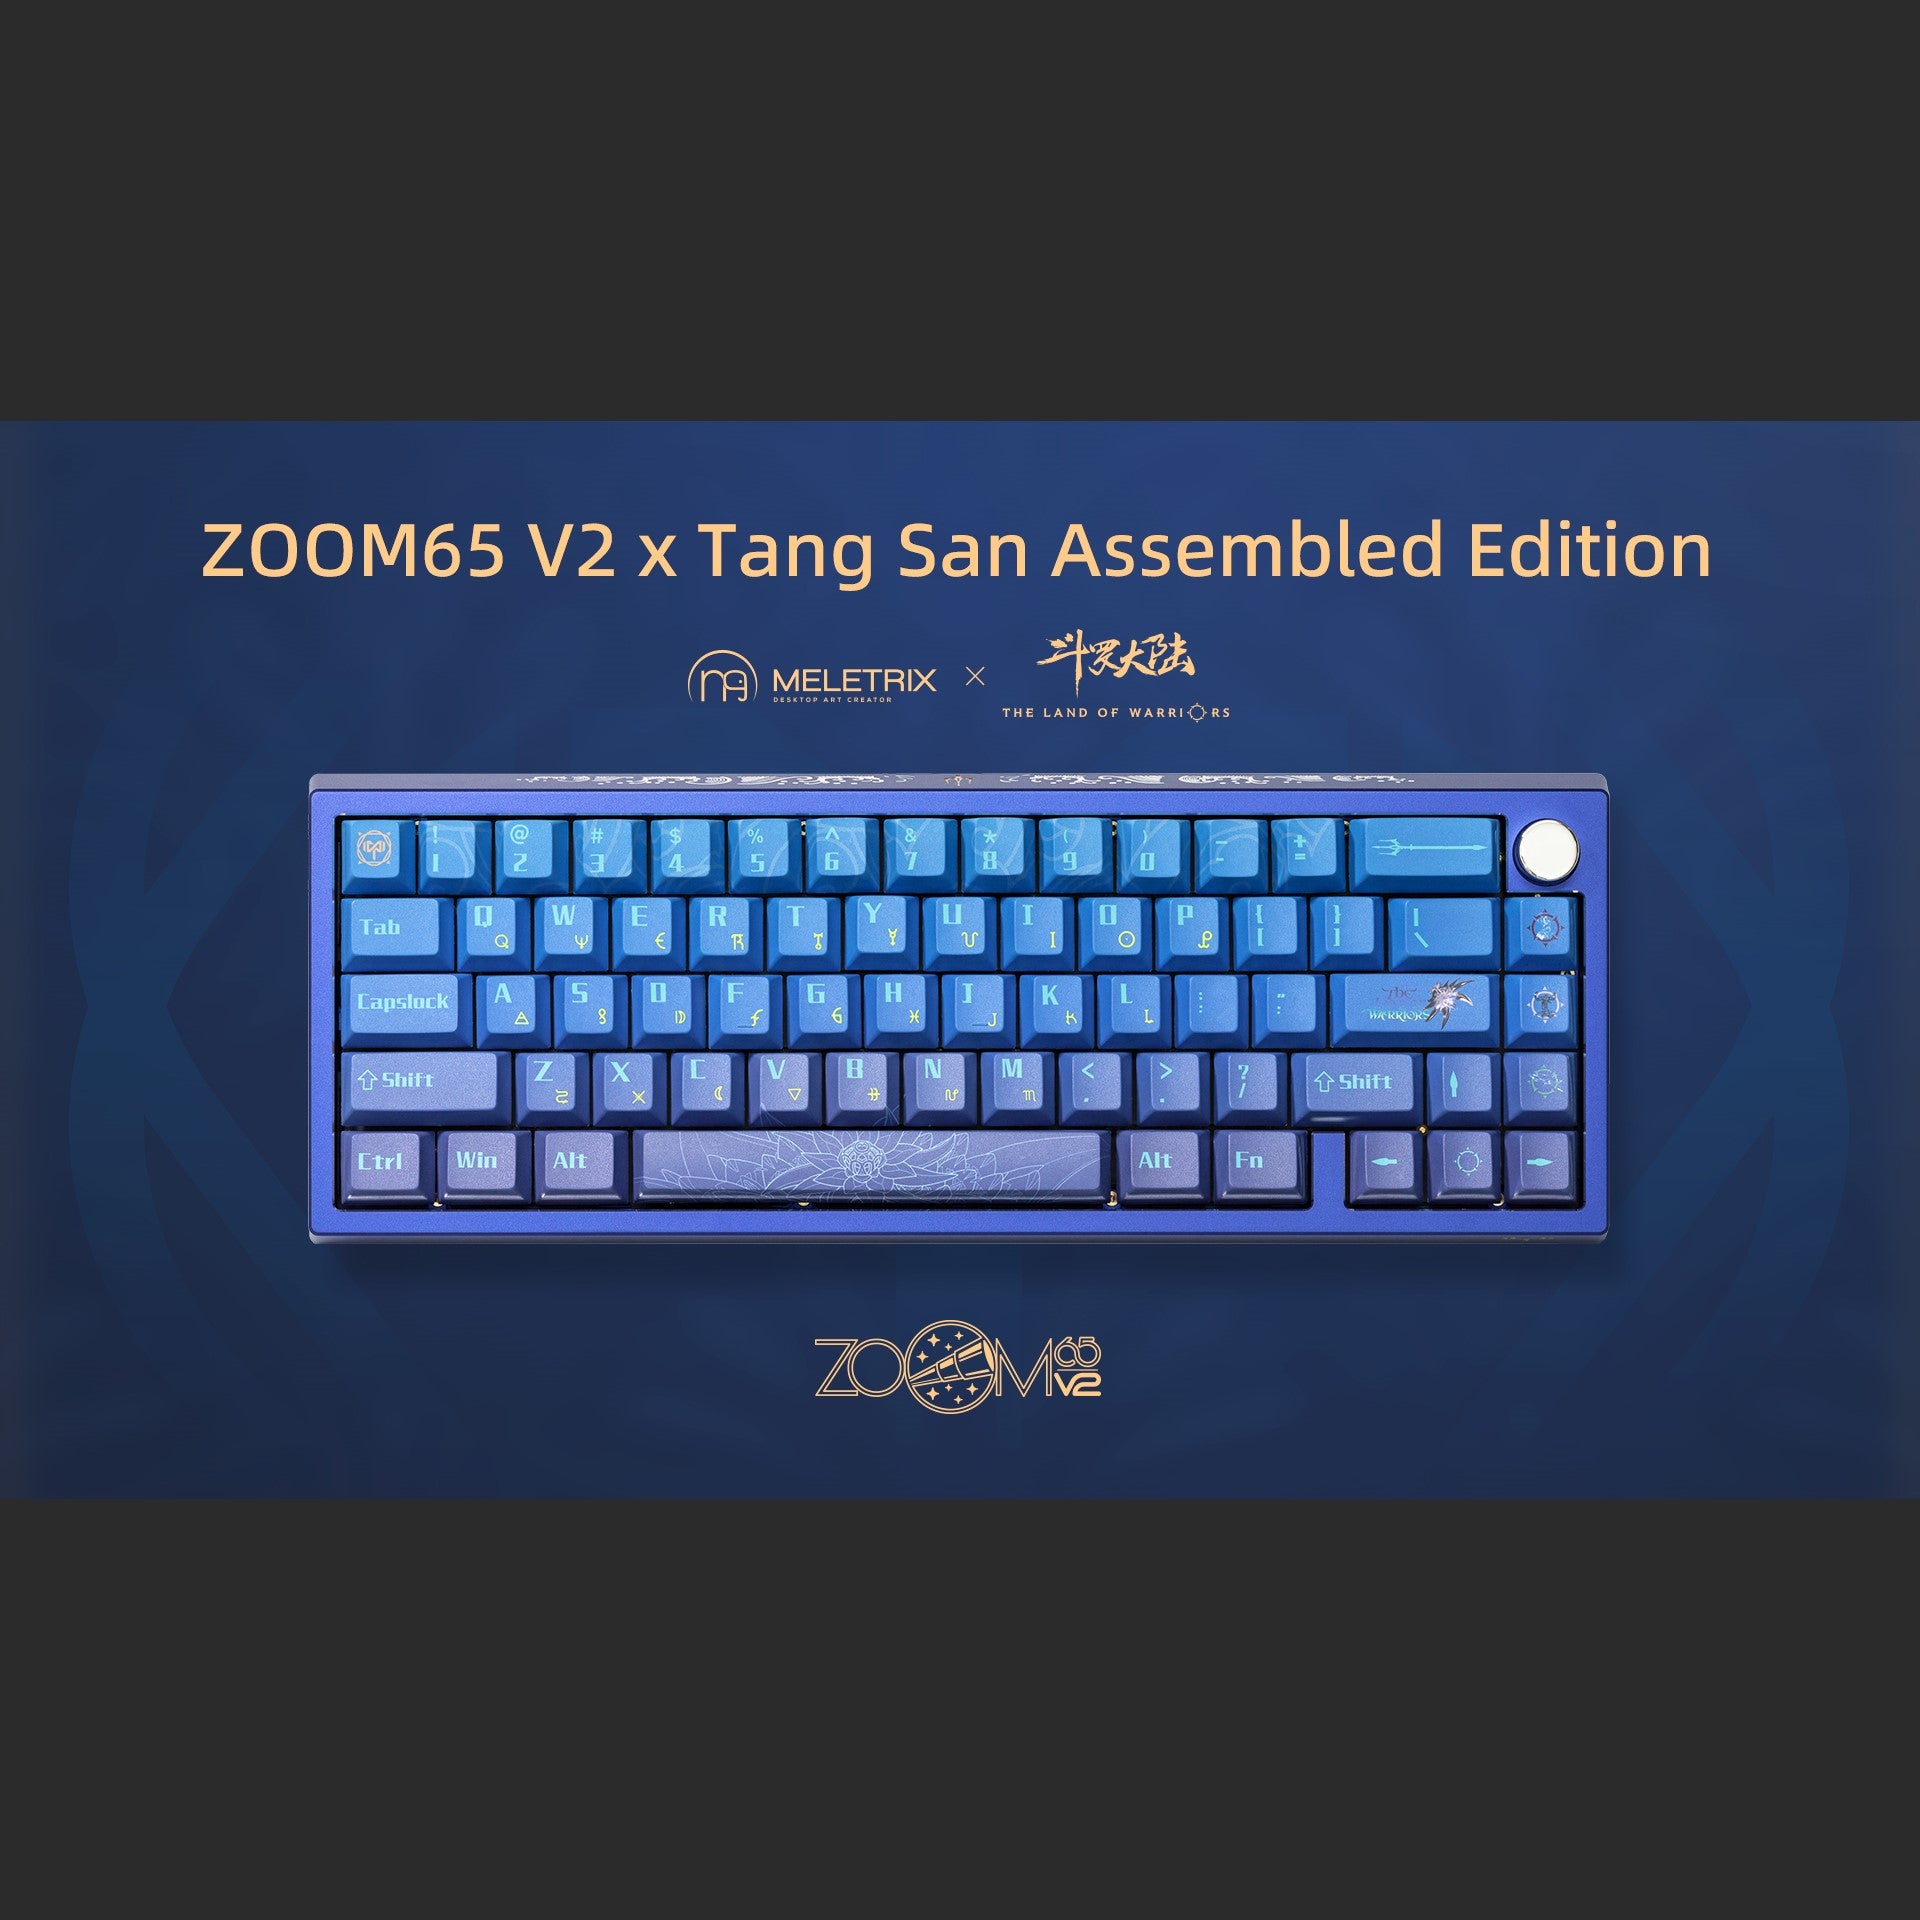 Zoom65 V2 x Soul Land Series - Group-Buy